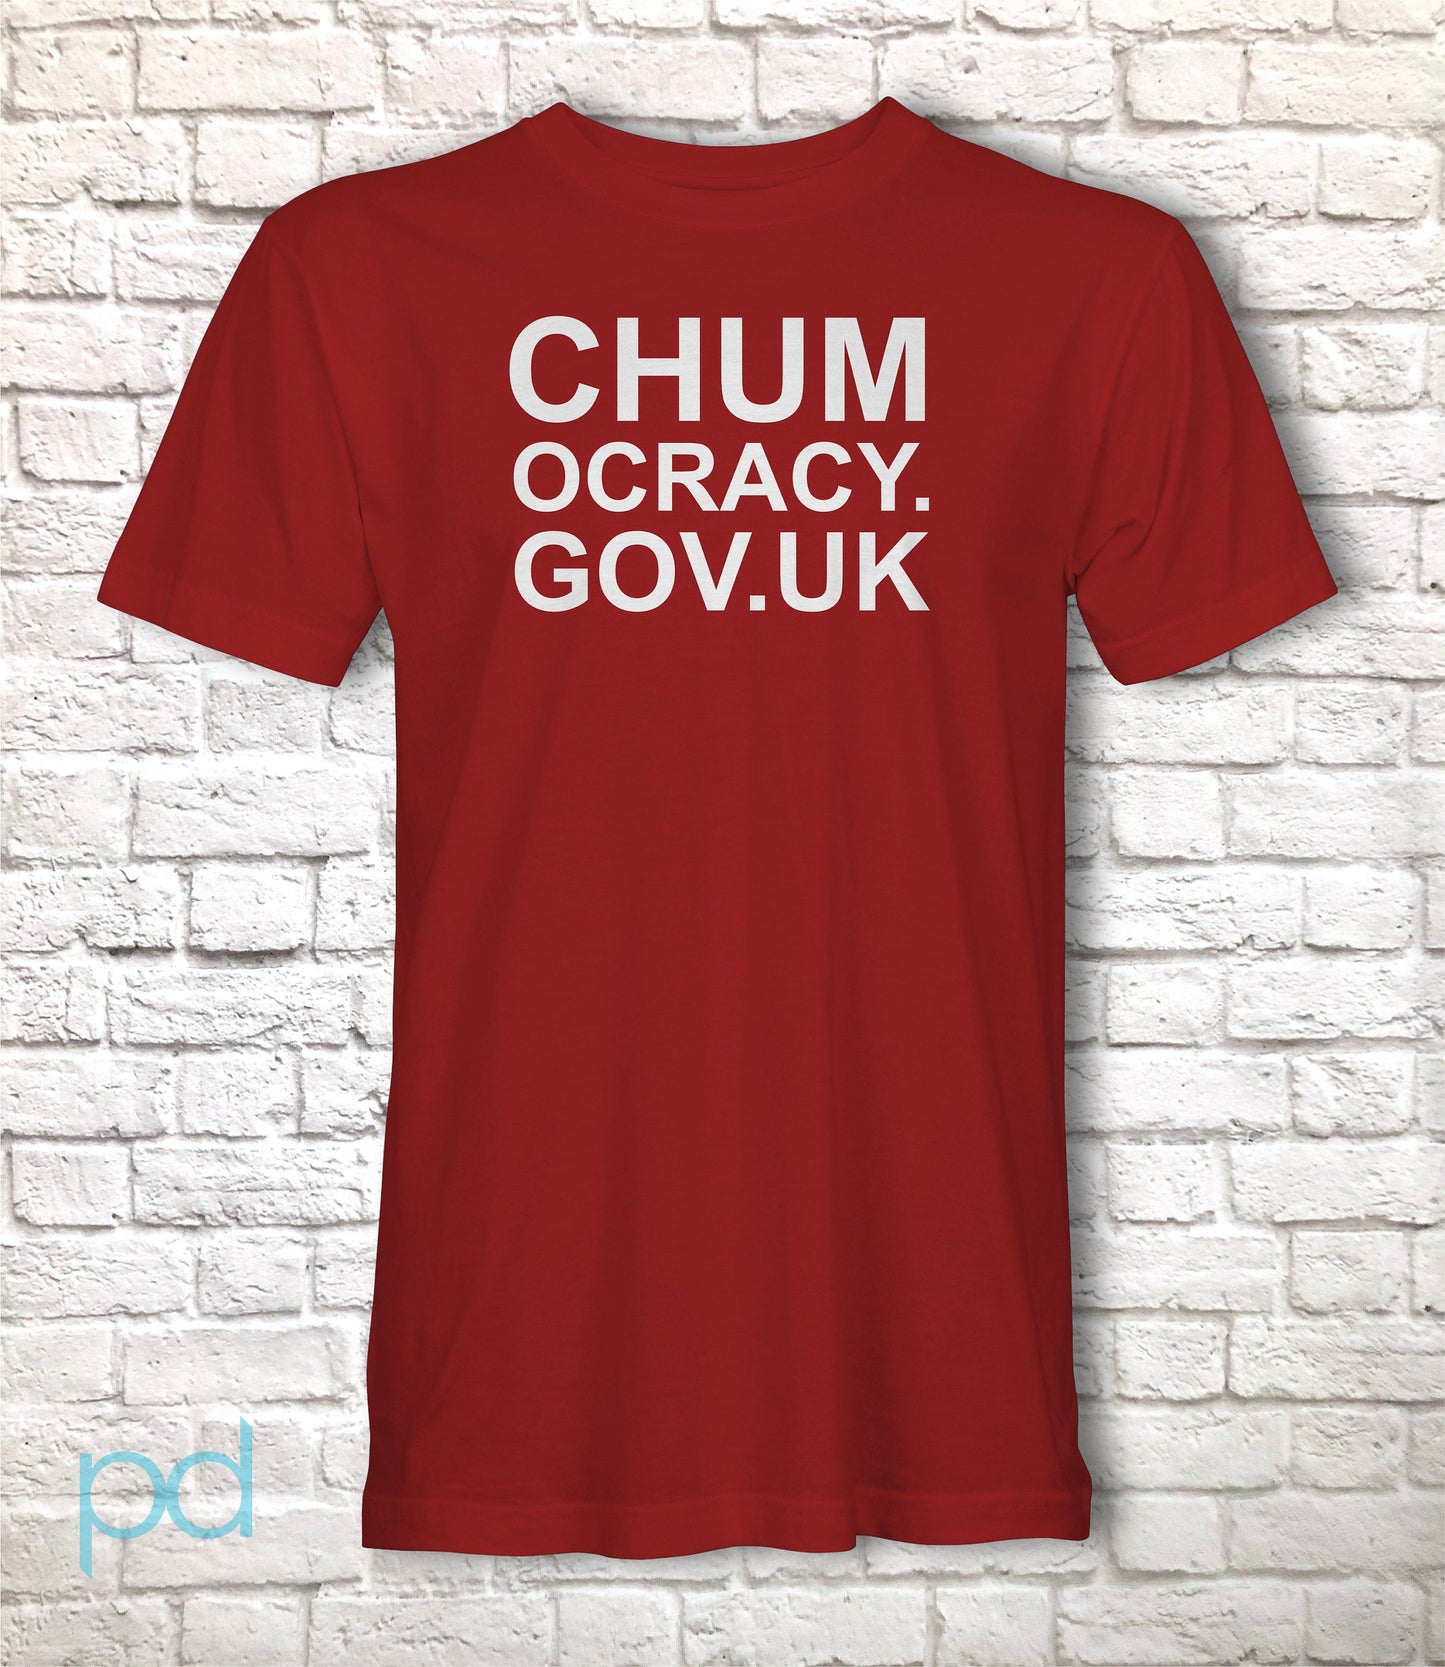 Chumocracy T-Shirt, UK Anti-Government Tee Shirt, chumocracy.gov.uk, Unisex Jersey Short Sleeve Graphic Print Top